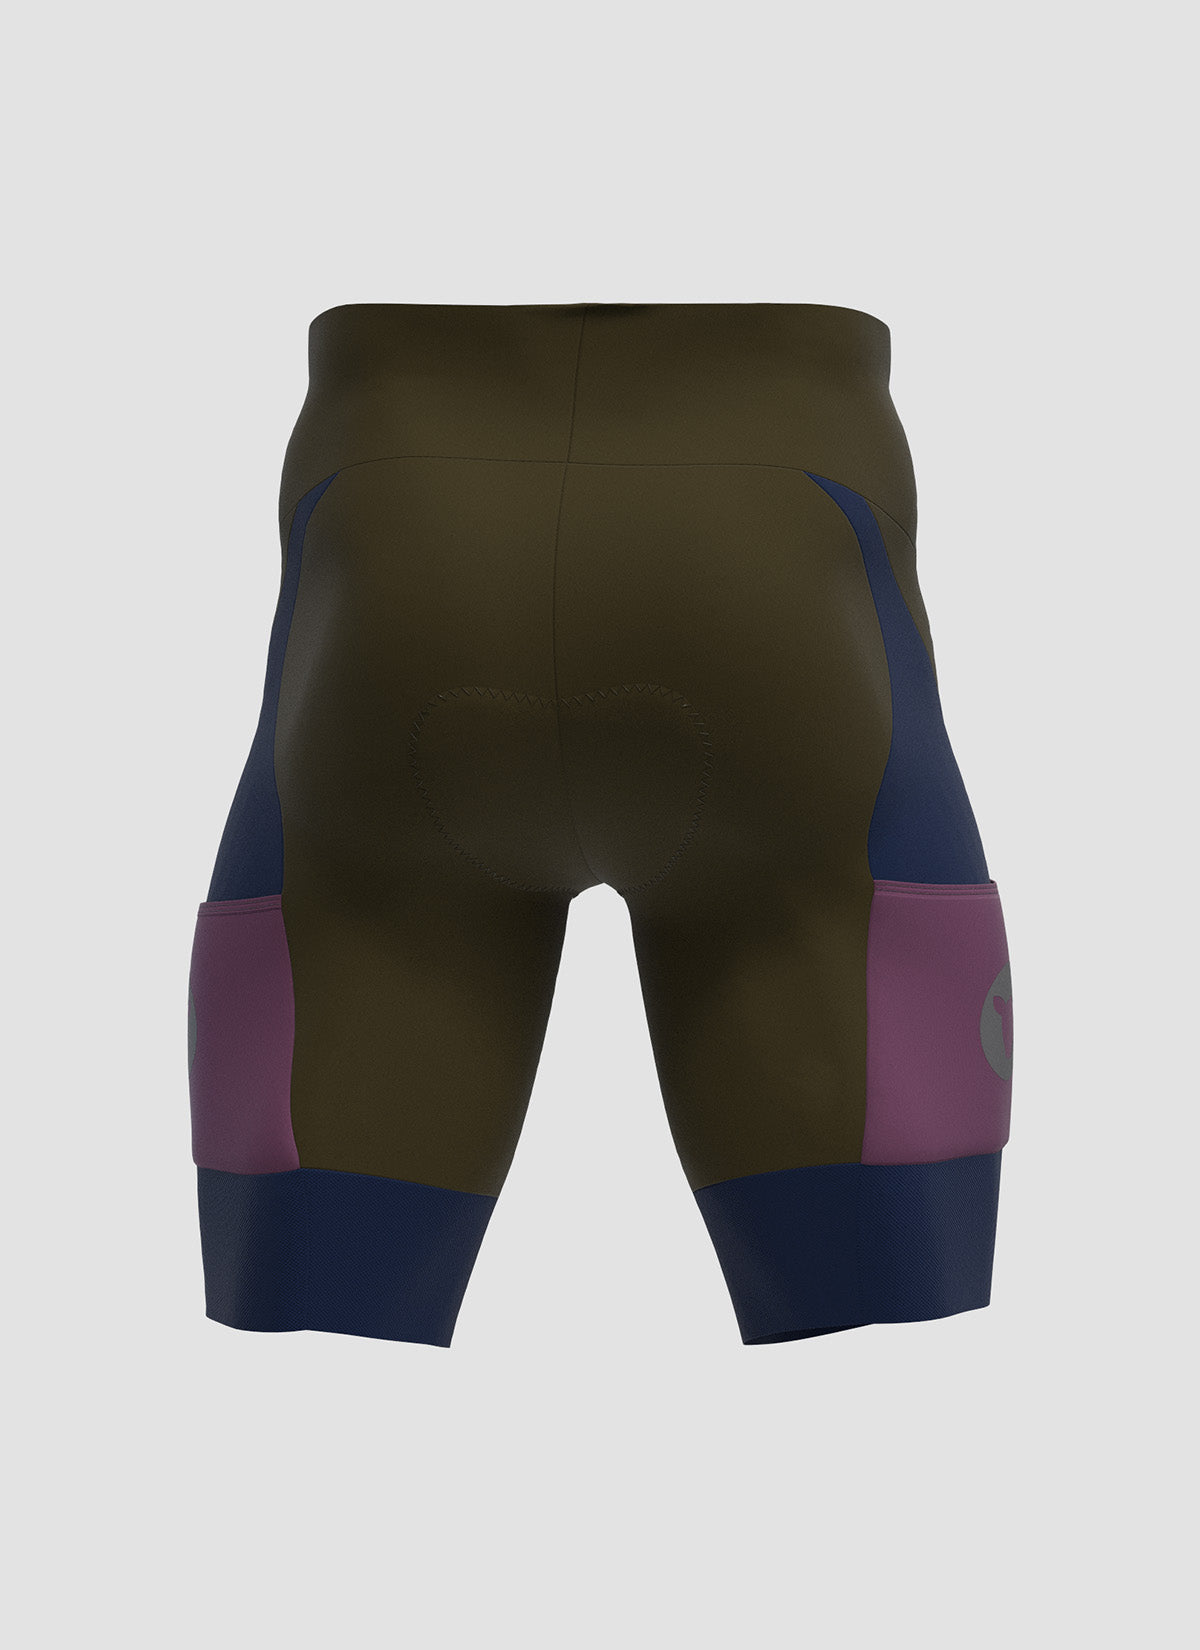 Men's Adventure Cargo Shorts - Olive